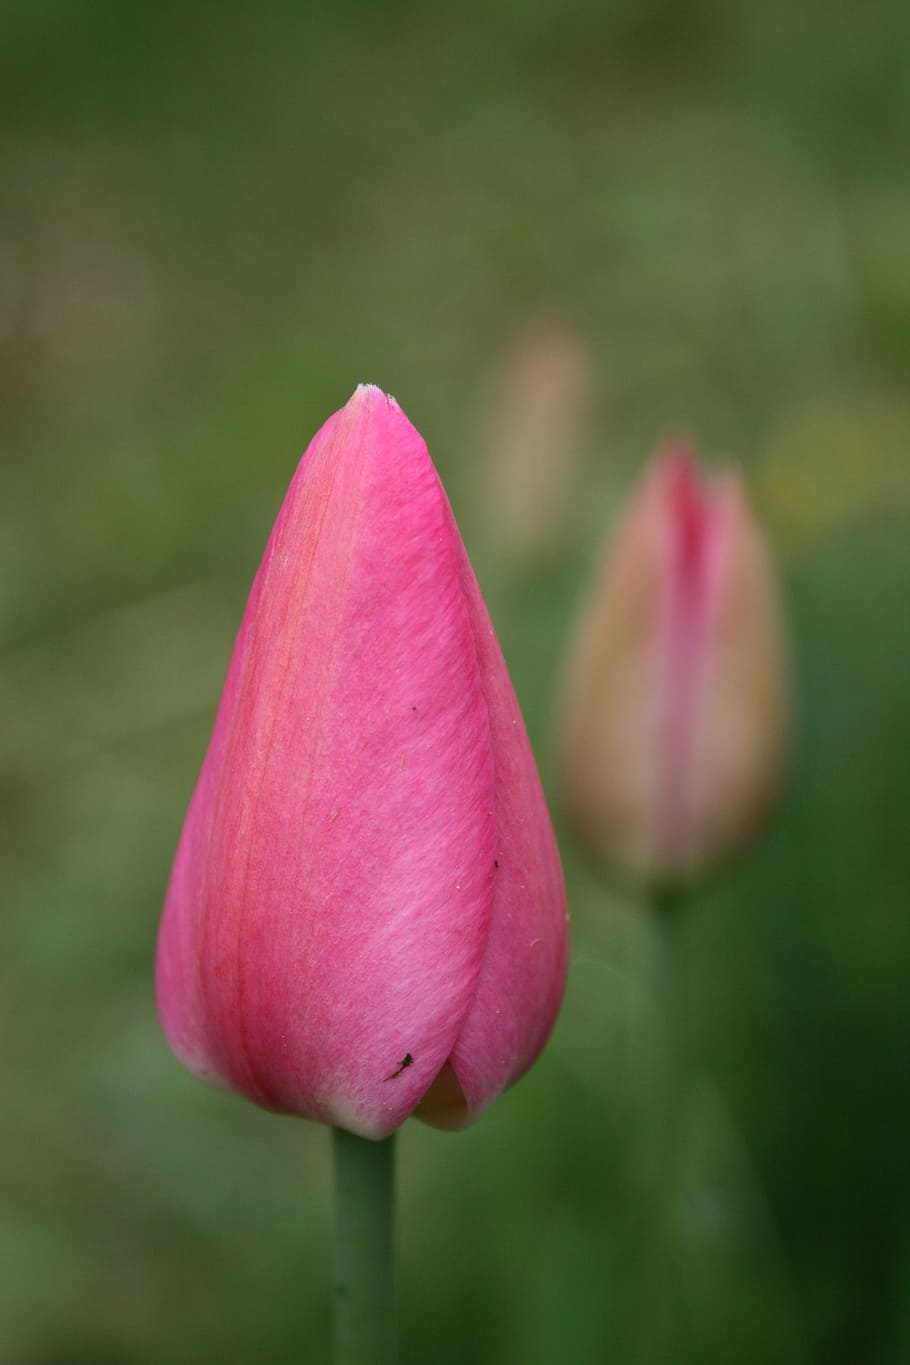 Tulip, Flower, Pink, Gentle, bud, pink color, petal, nature, fragility, growth